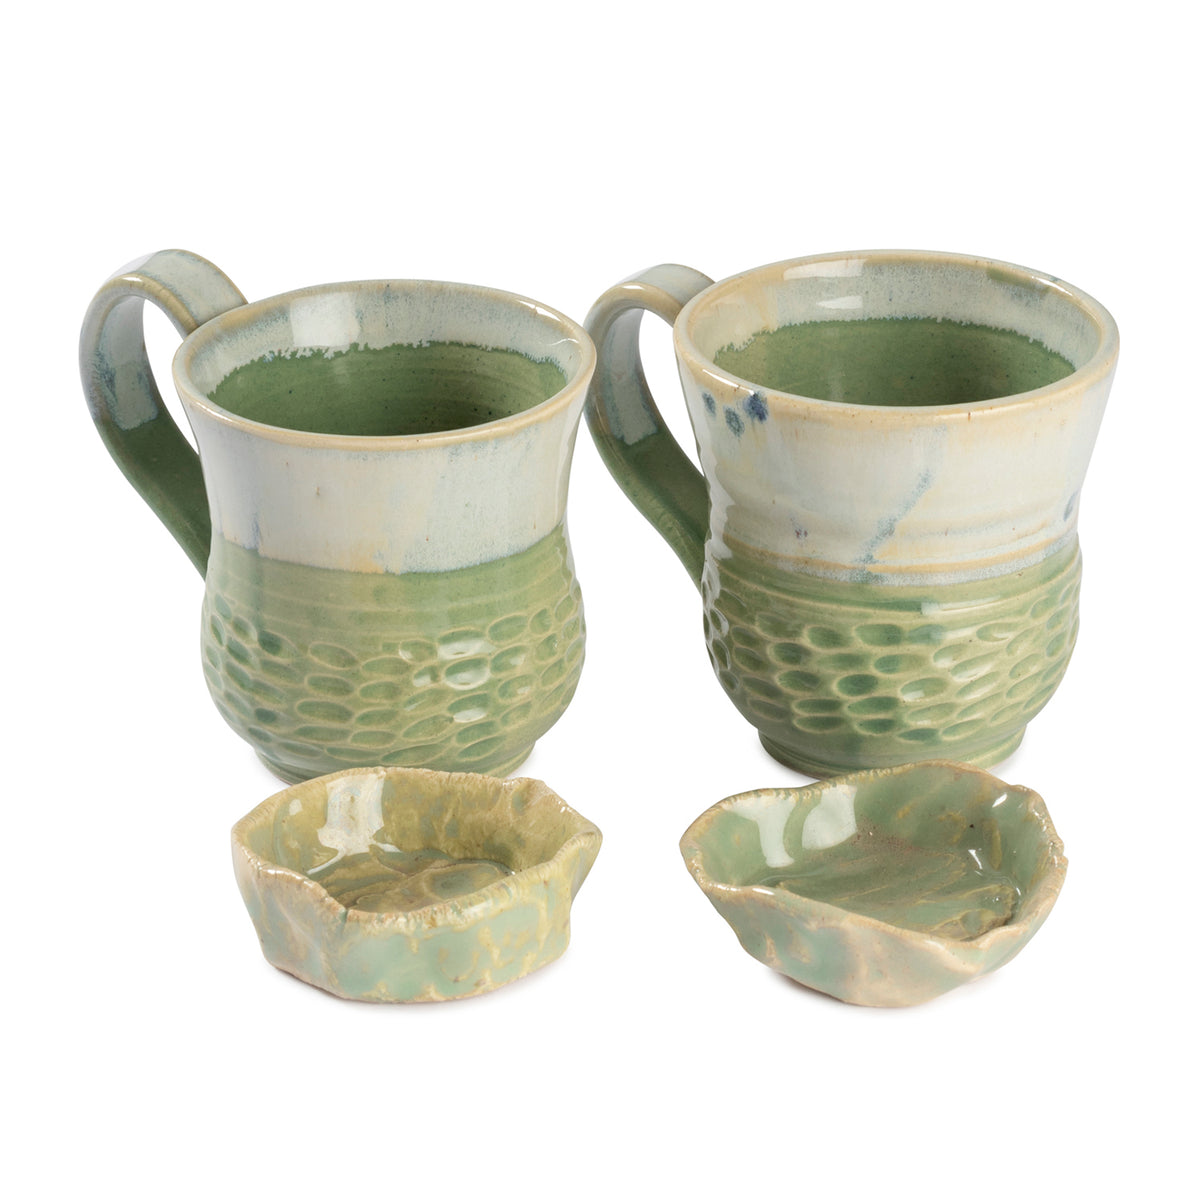 Stoneware Ceramic Mugs - Set of 2 - 3x3